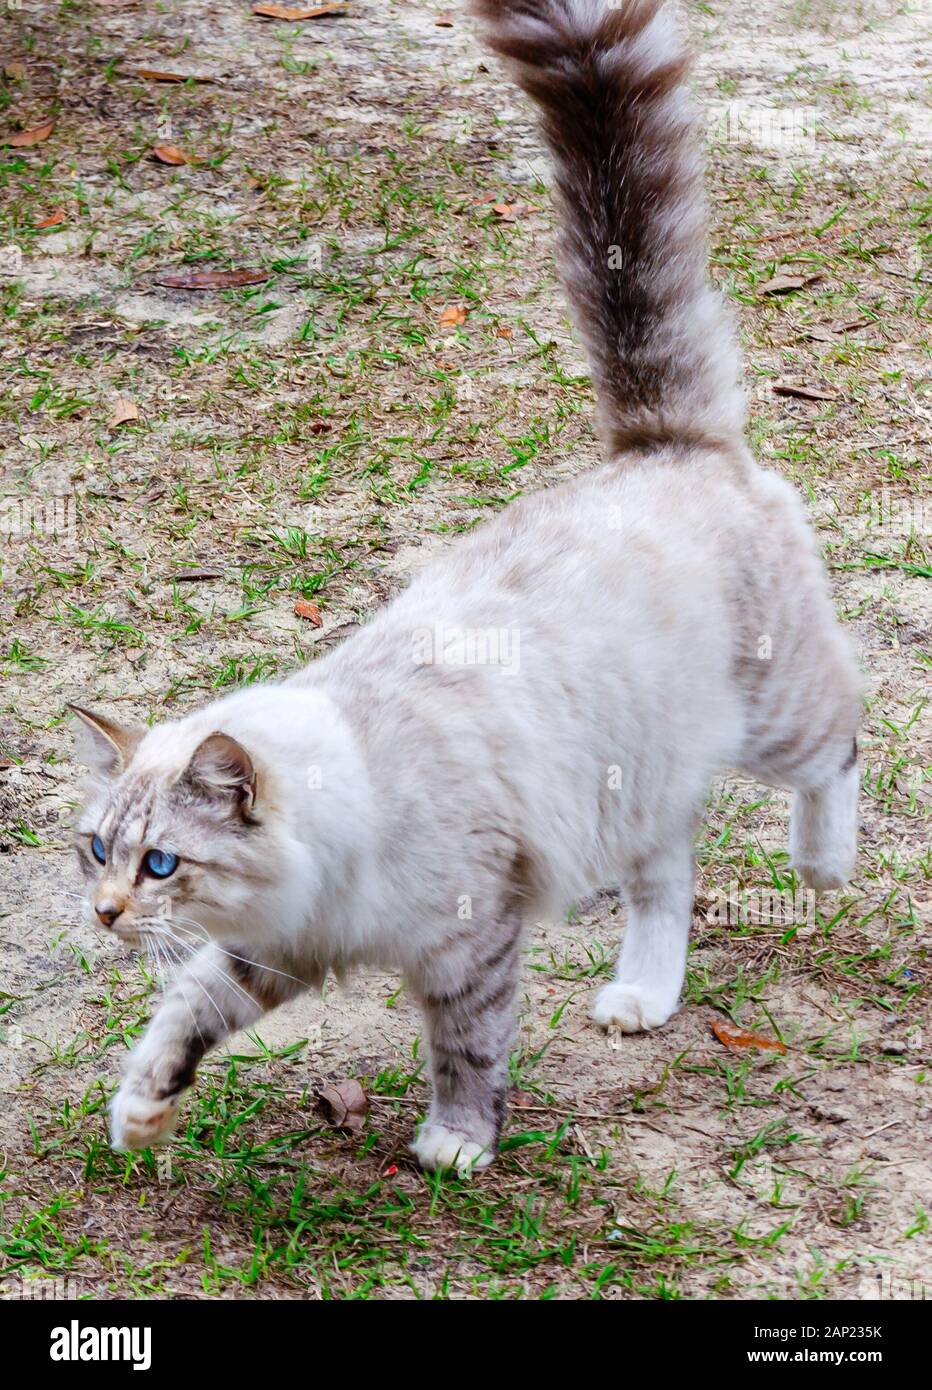 A long-haired silver tabby cat walks across a yard, Jan. 13, 2020, in Coden, Alabama. Stock Photo